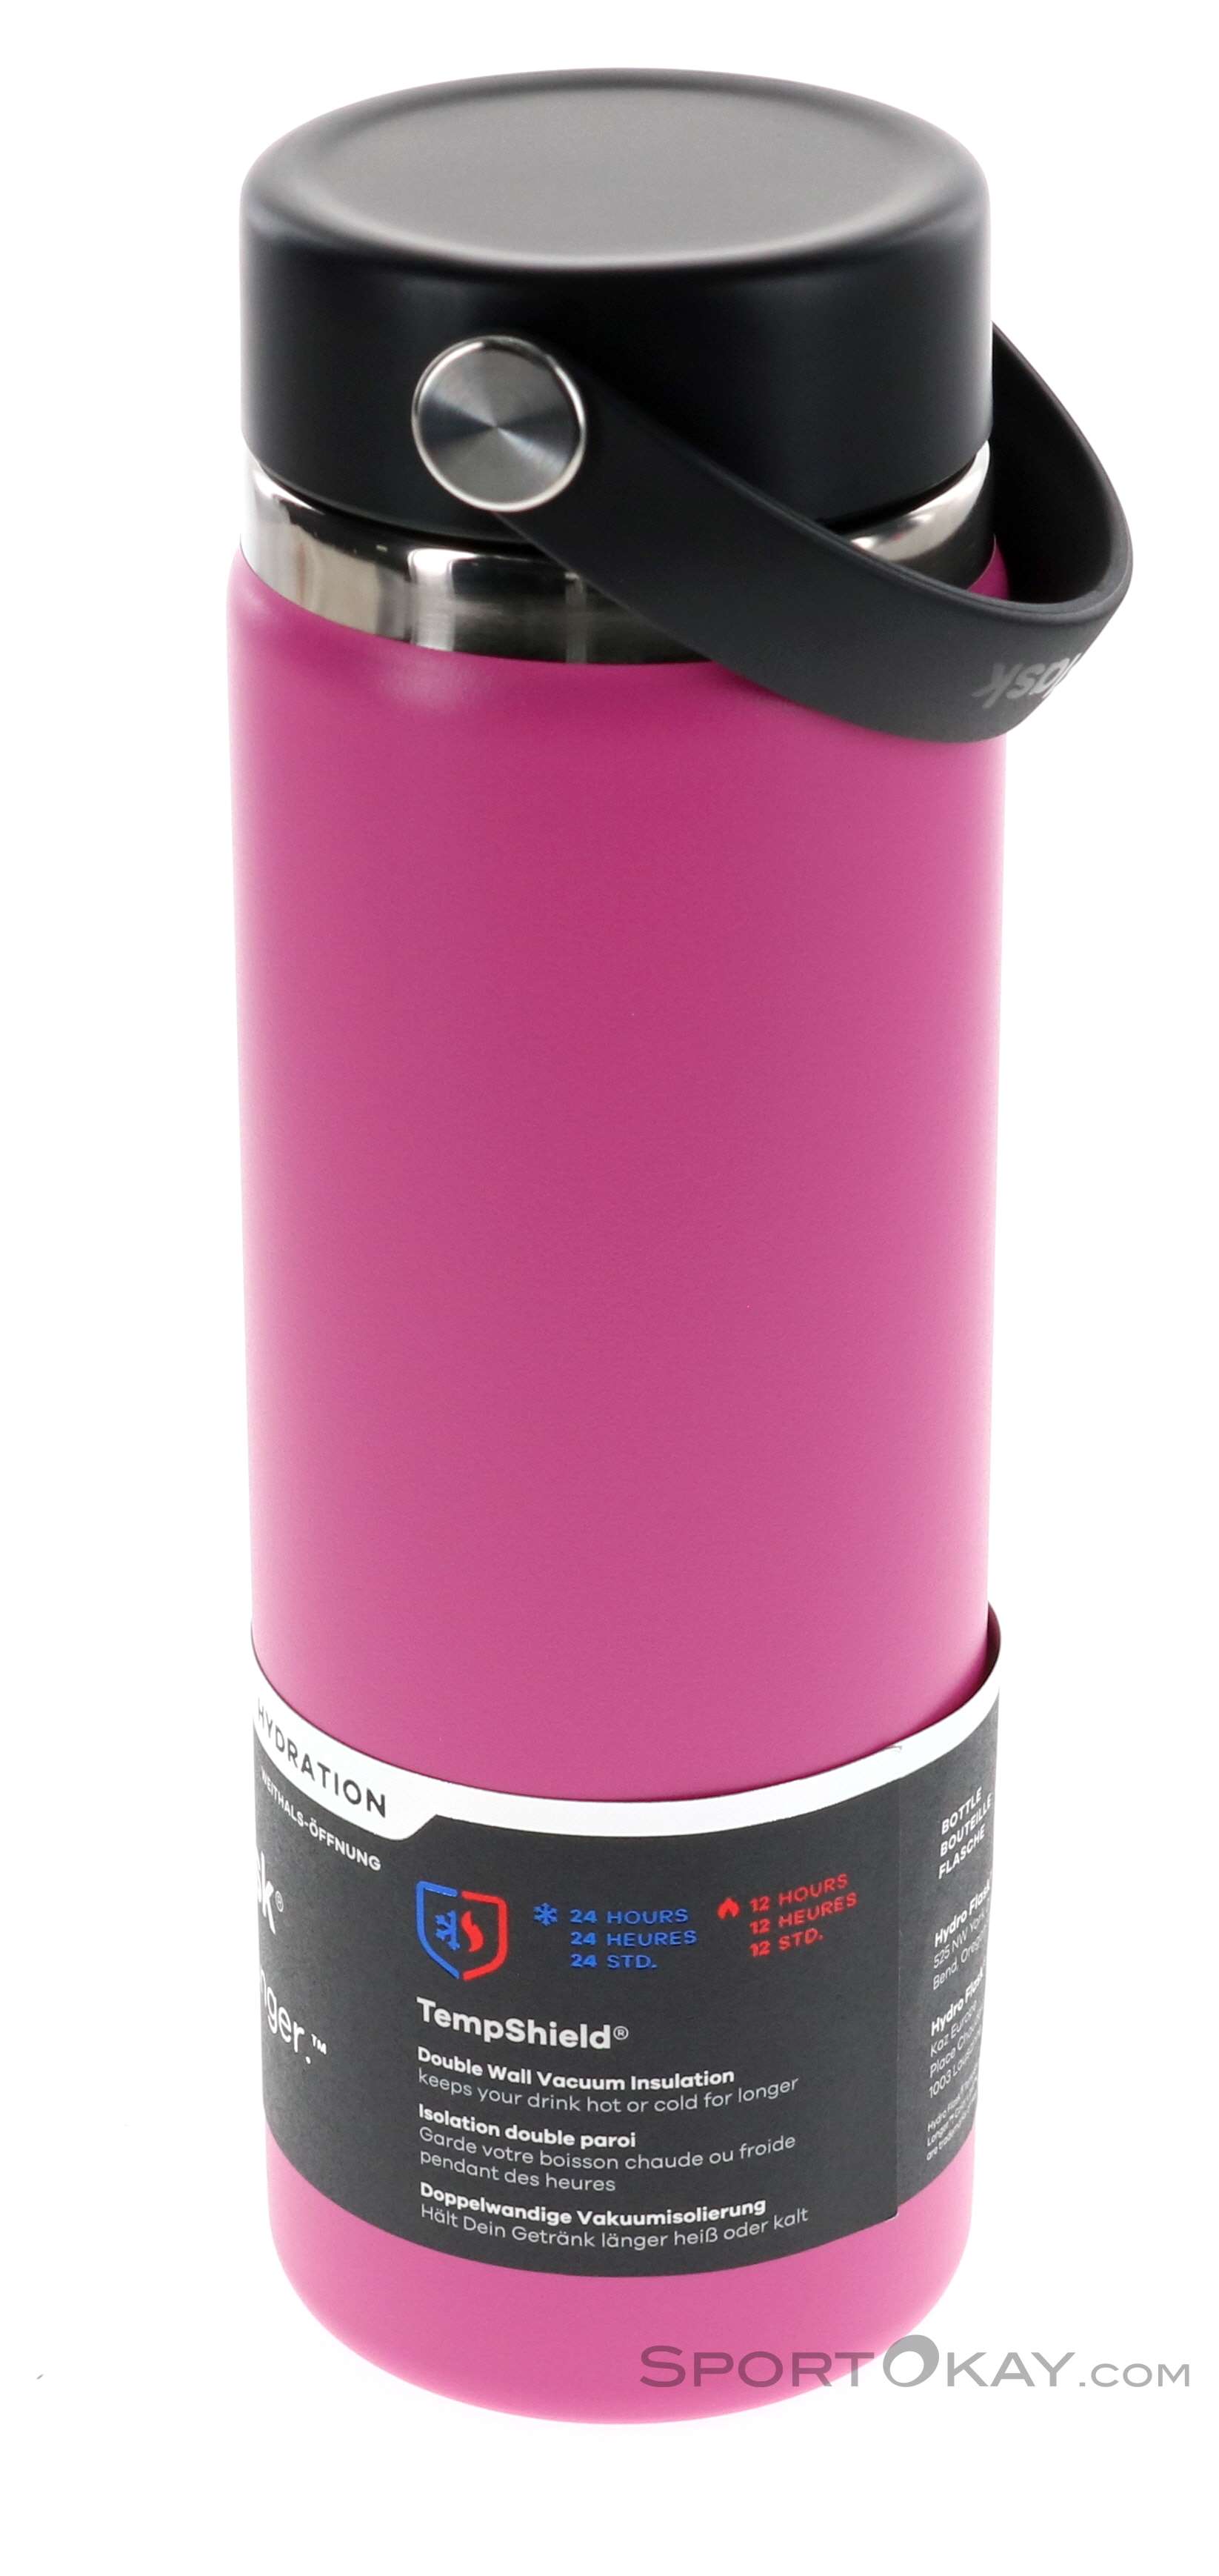 Hydro Flask 20 OZ Flex Cap Carnation 0,591 Thermos Bottle - Water